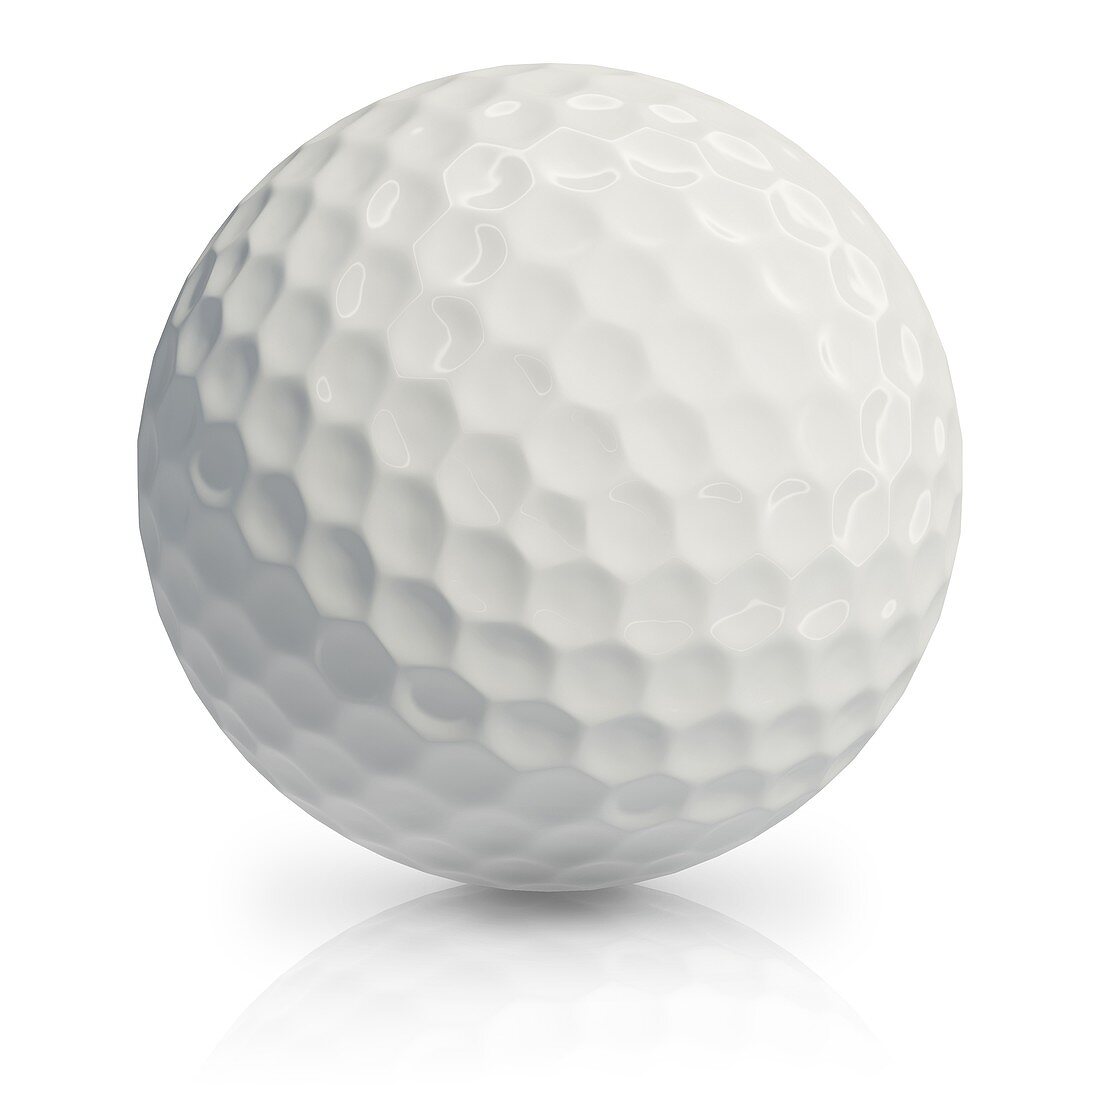 Golf ball, illustration